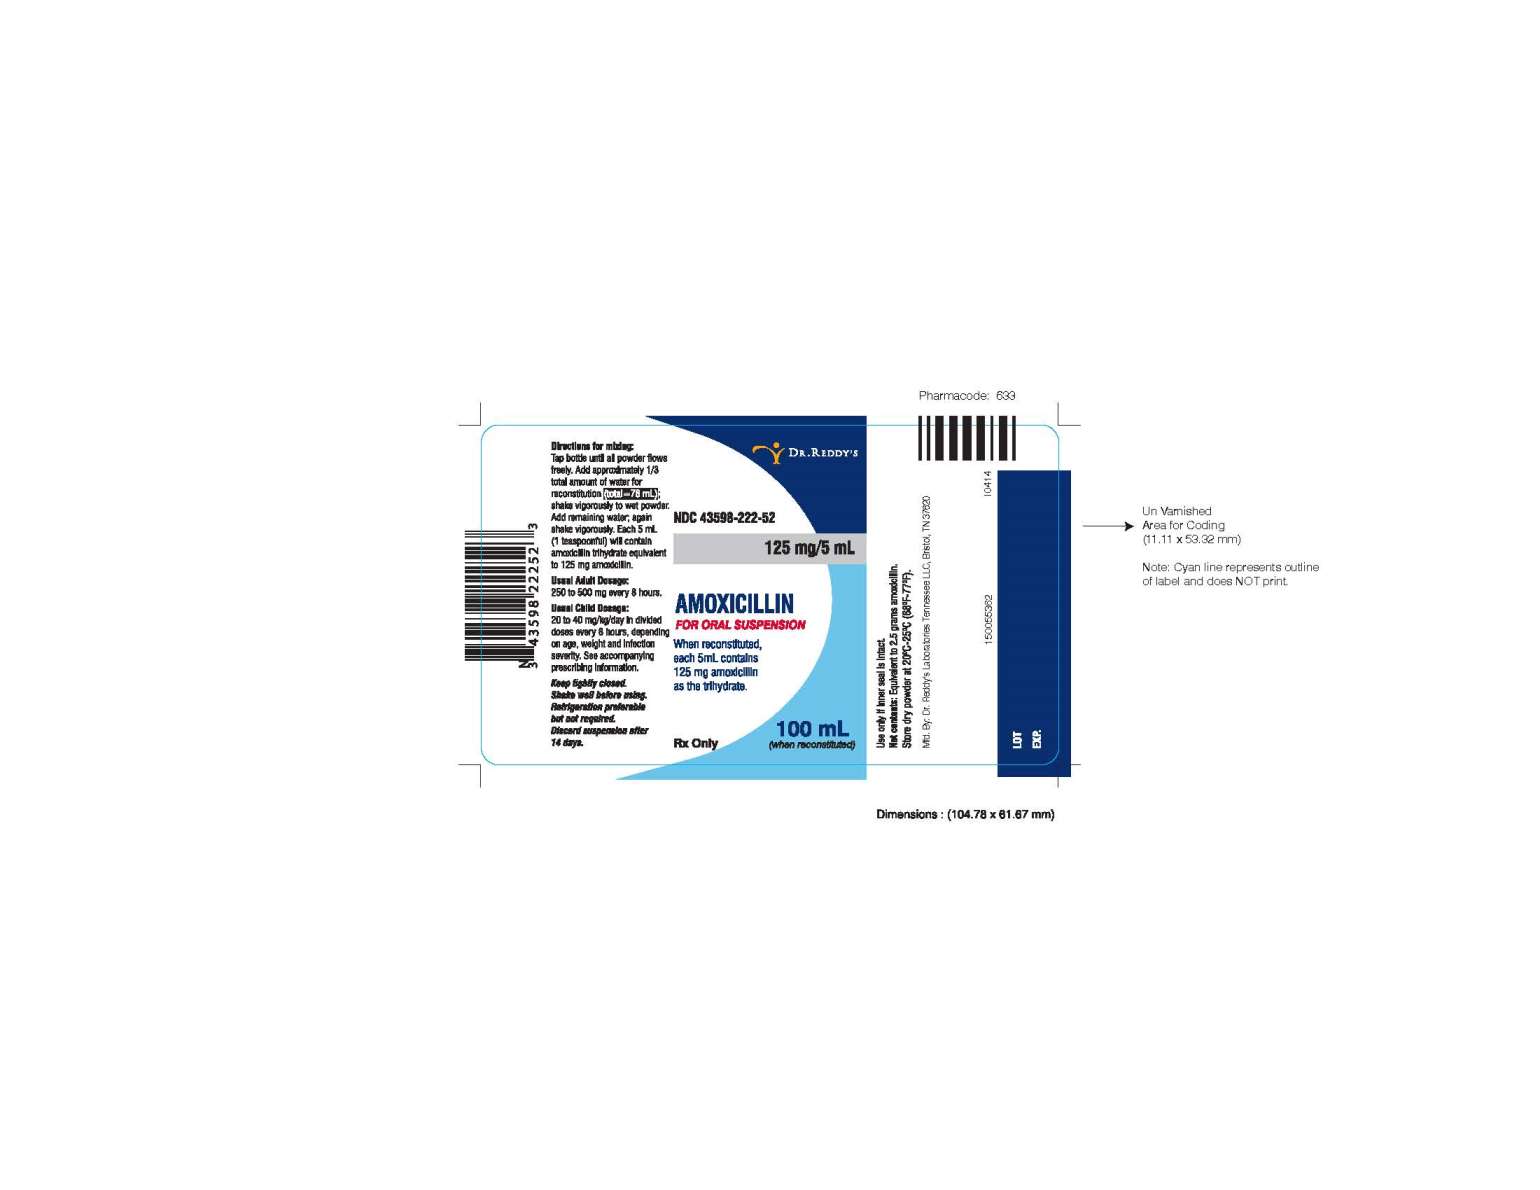 Amoxicillin Powder for Oral Suspension Label Image - 125 mg/5 mL, 100 mL